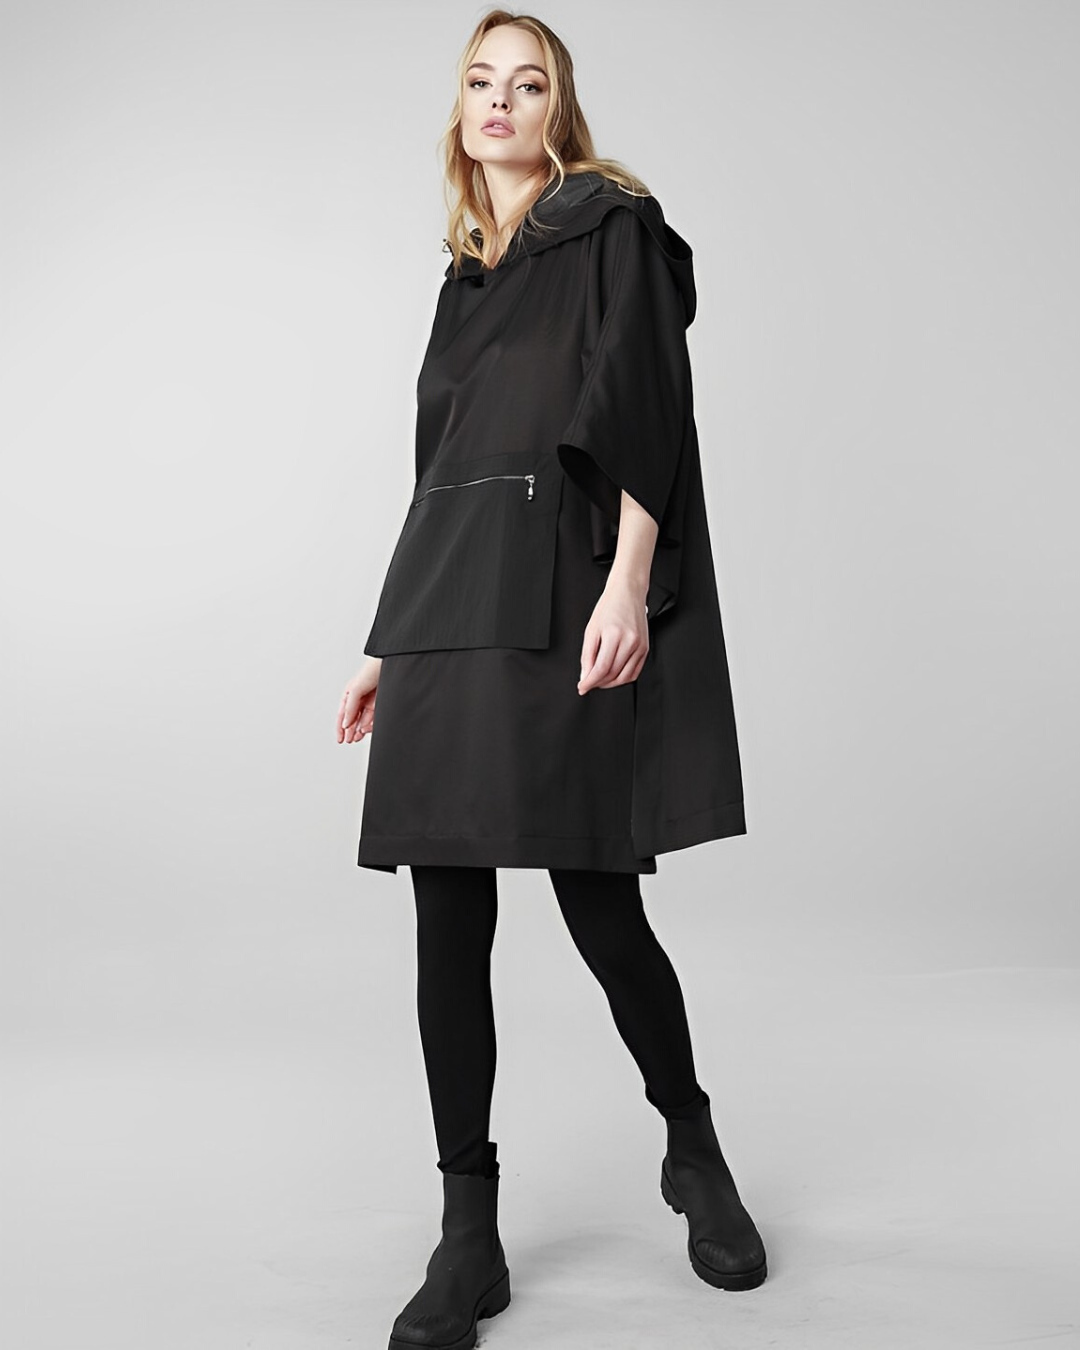 Fashion Forward Kangaroo Jacket Design 22809 - Black